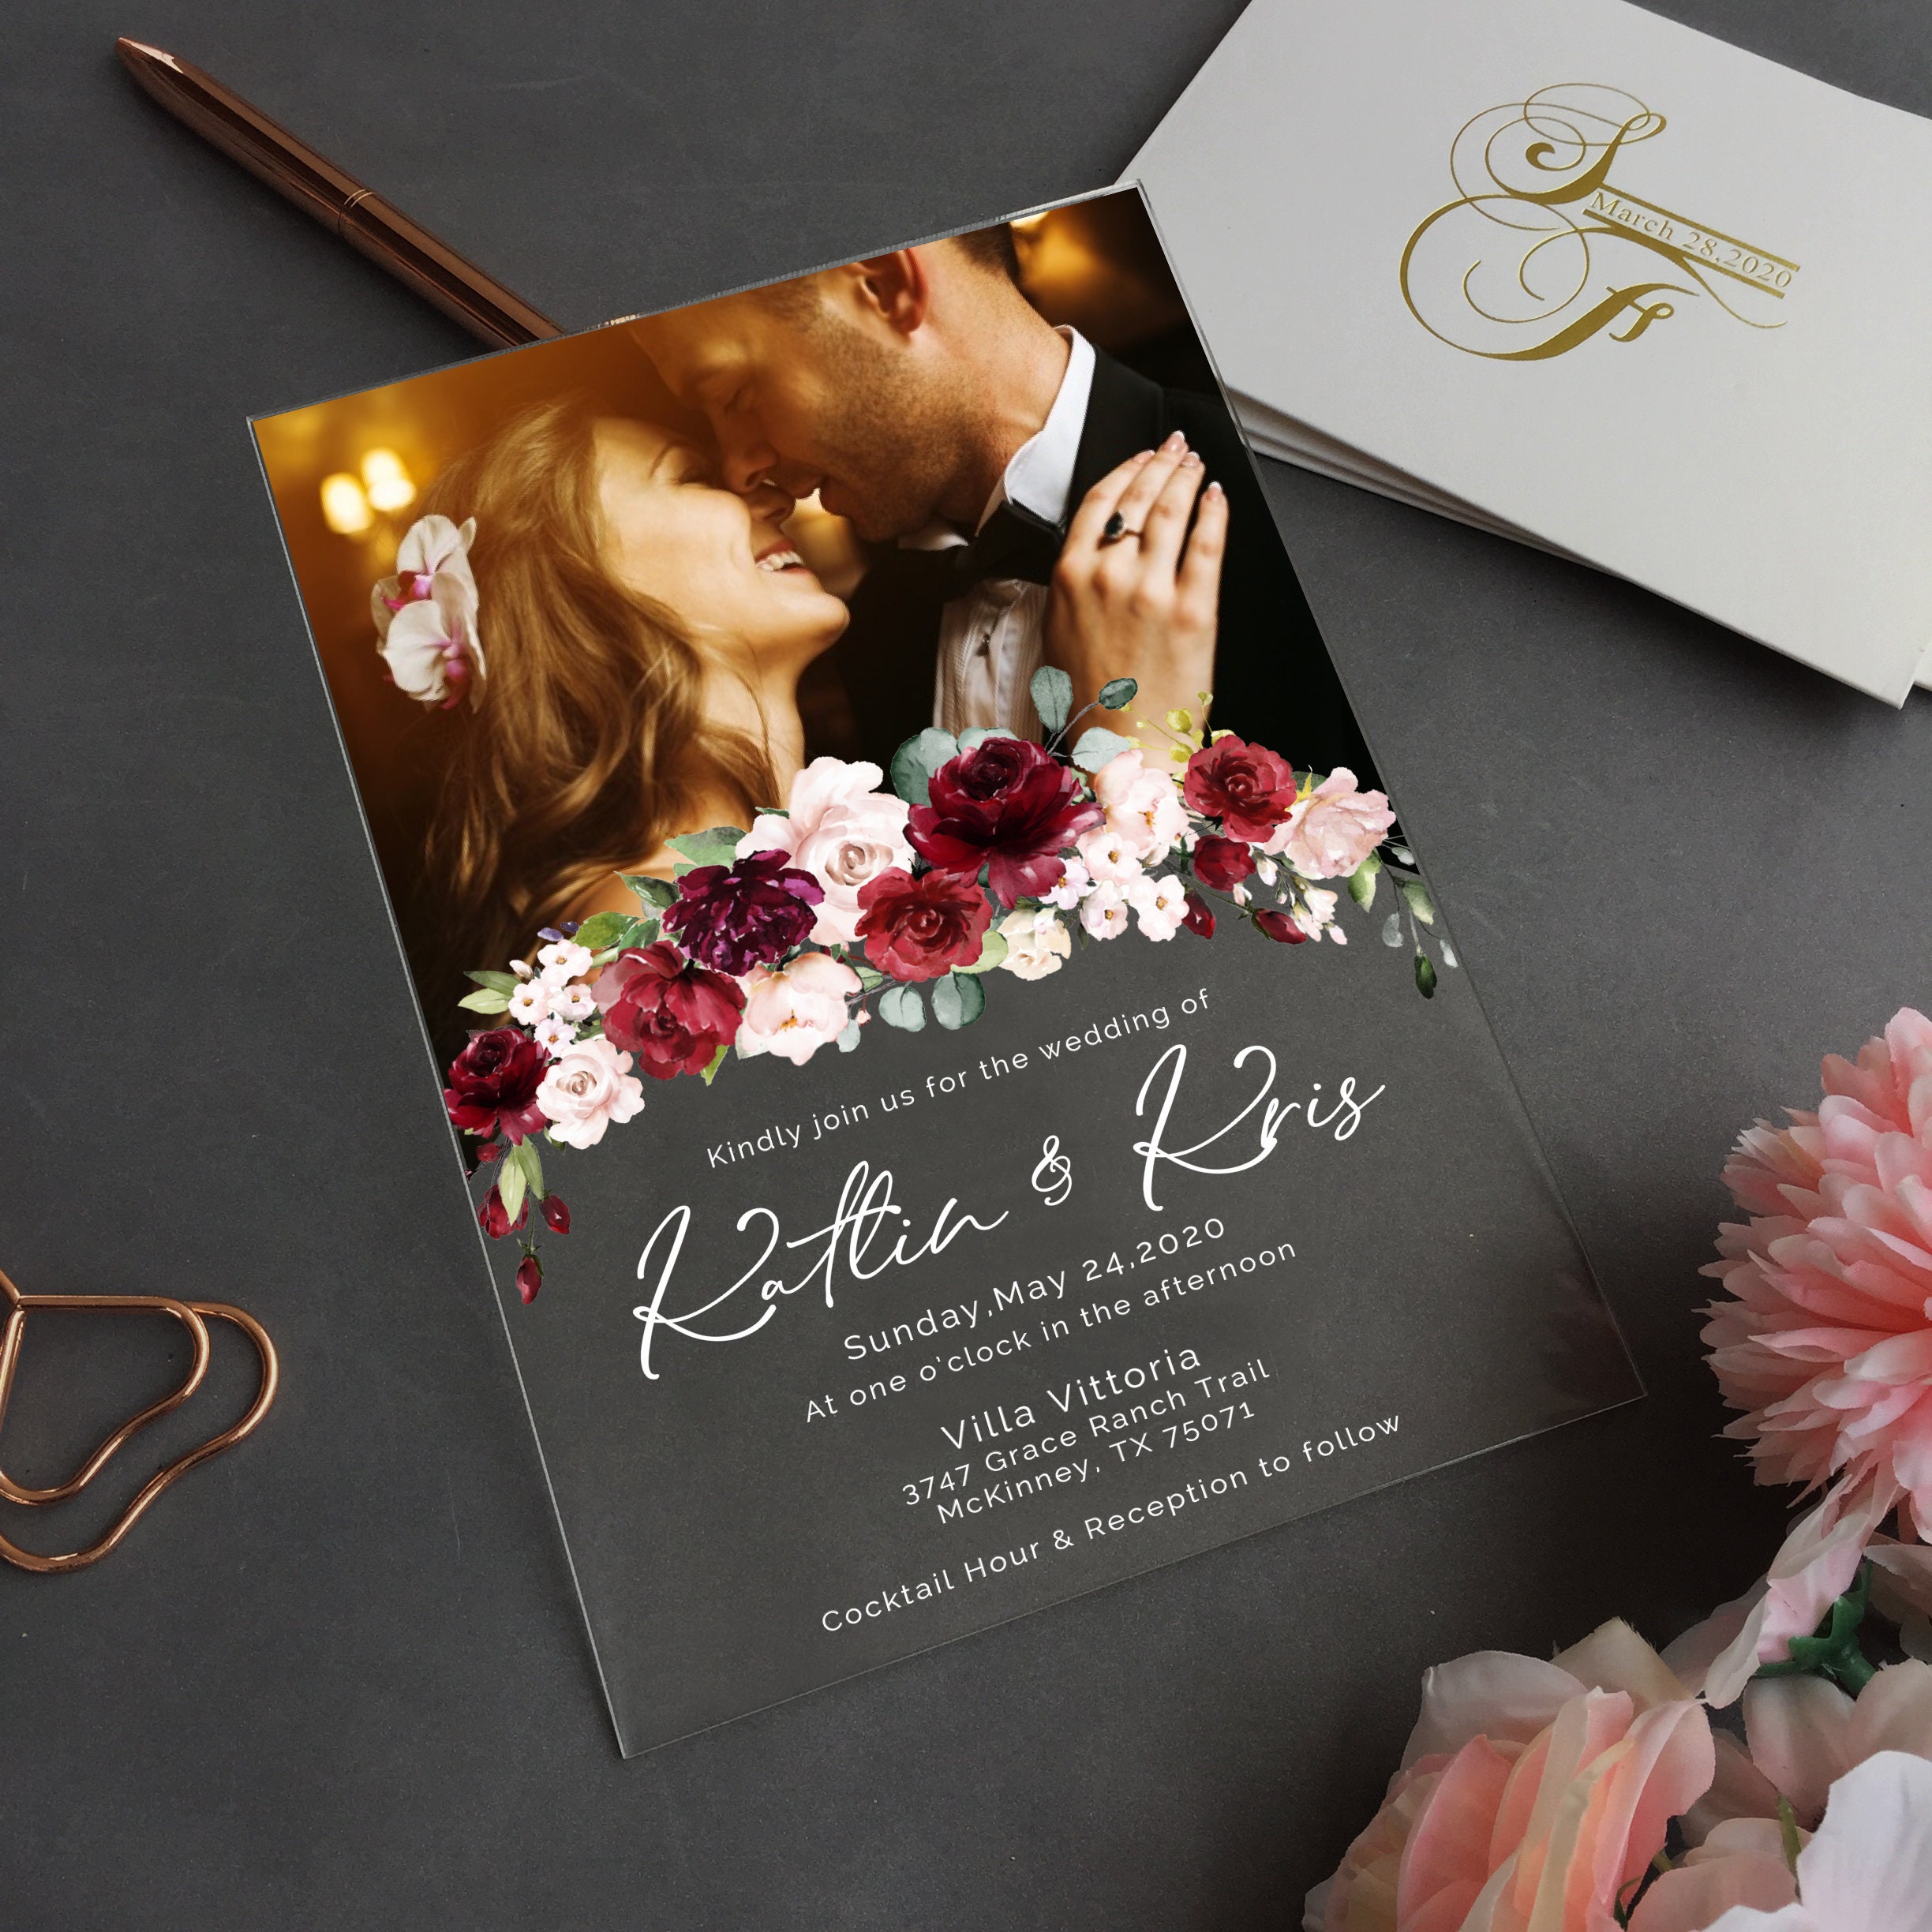 Buy Acrylic Invitations for Weddings, Acrylic Invitations for Quinceanera, Acrylic Invitations Personalized, Acrylic Invitations Blanks, Size 6 x  4 inch